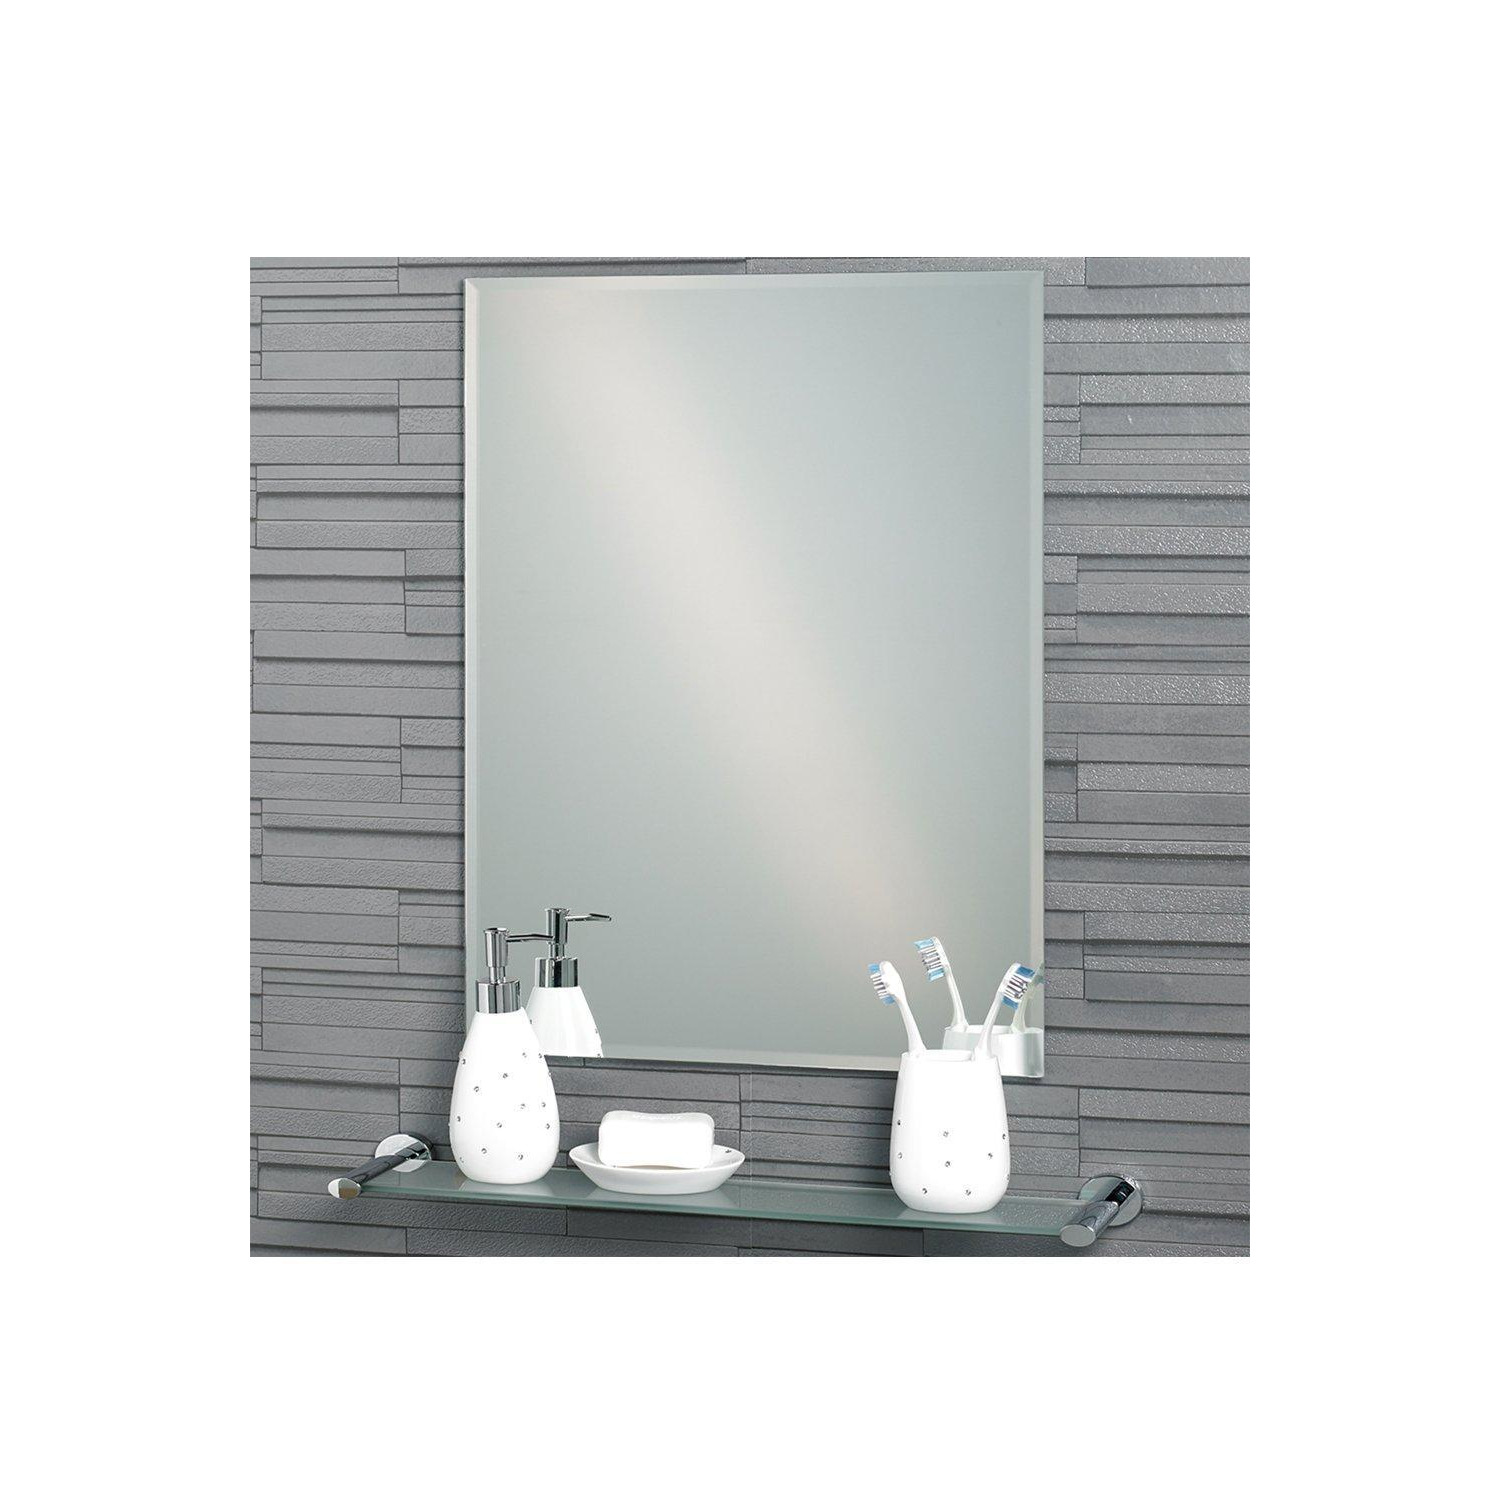 'Fairmont' Rectangular Mirror Small 60cmx45cm - image 1